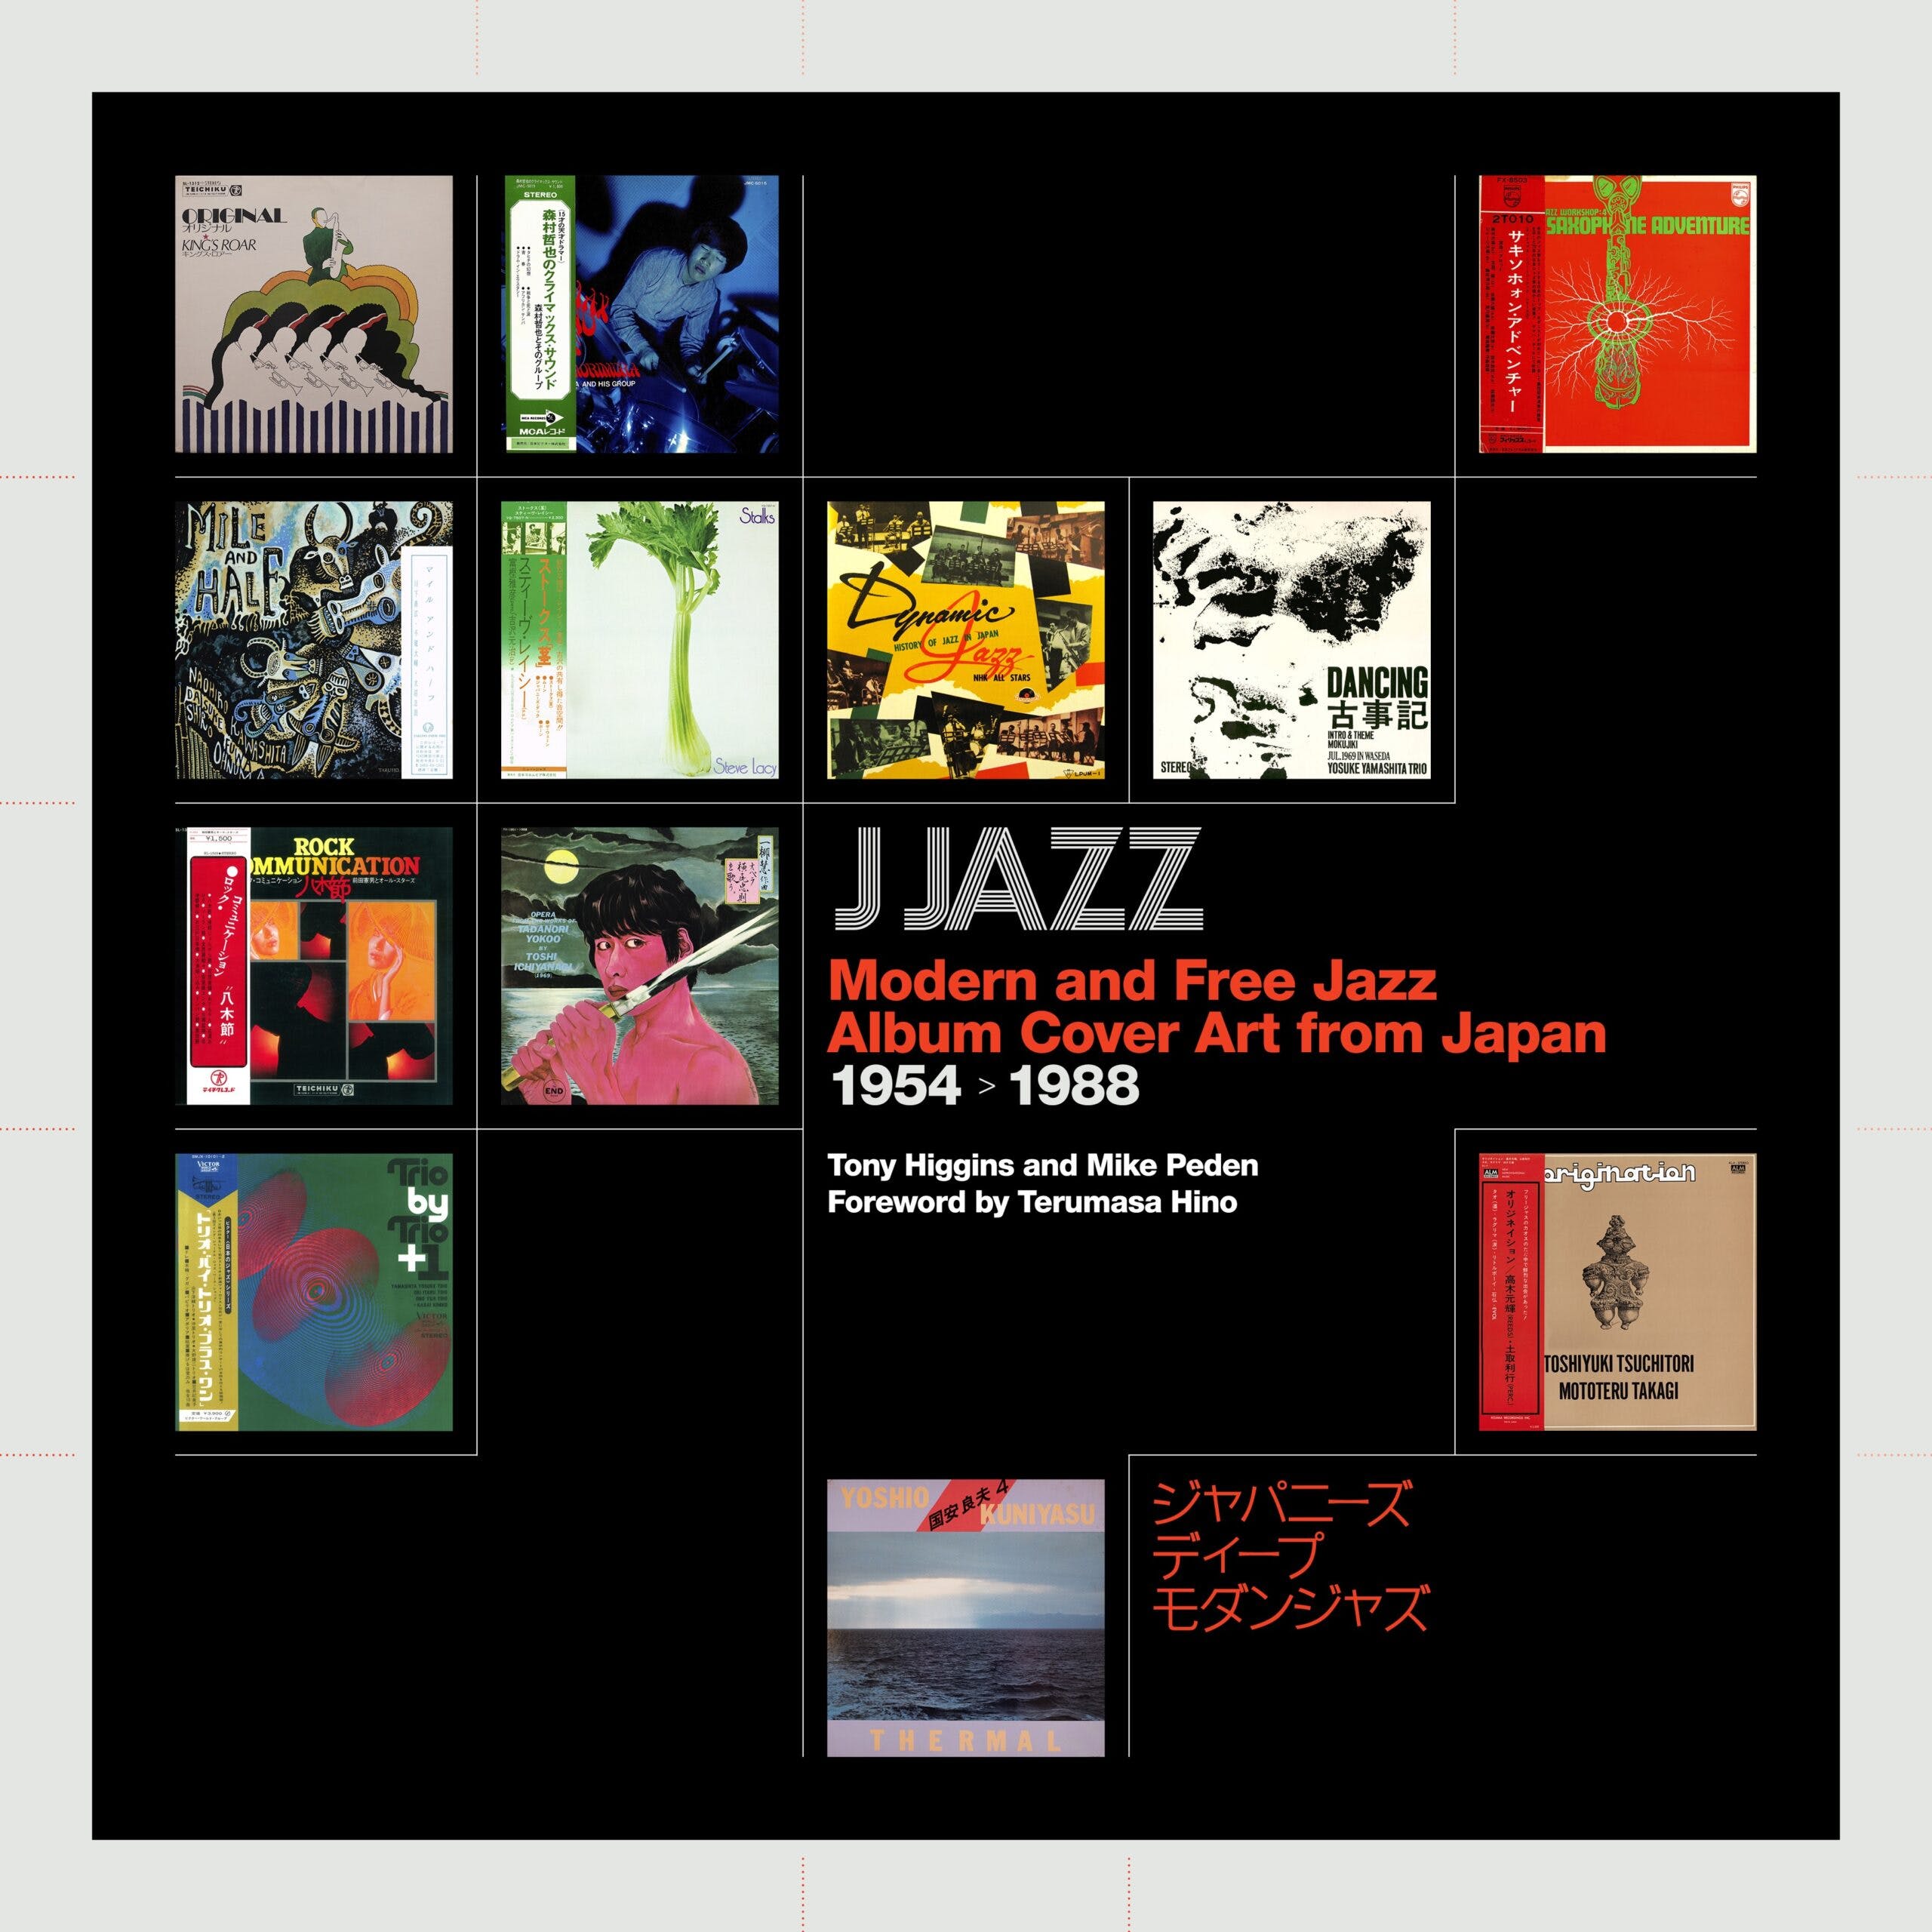 J Jazz: Free and Modern Jazz From Japan 1954-1988